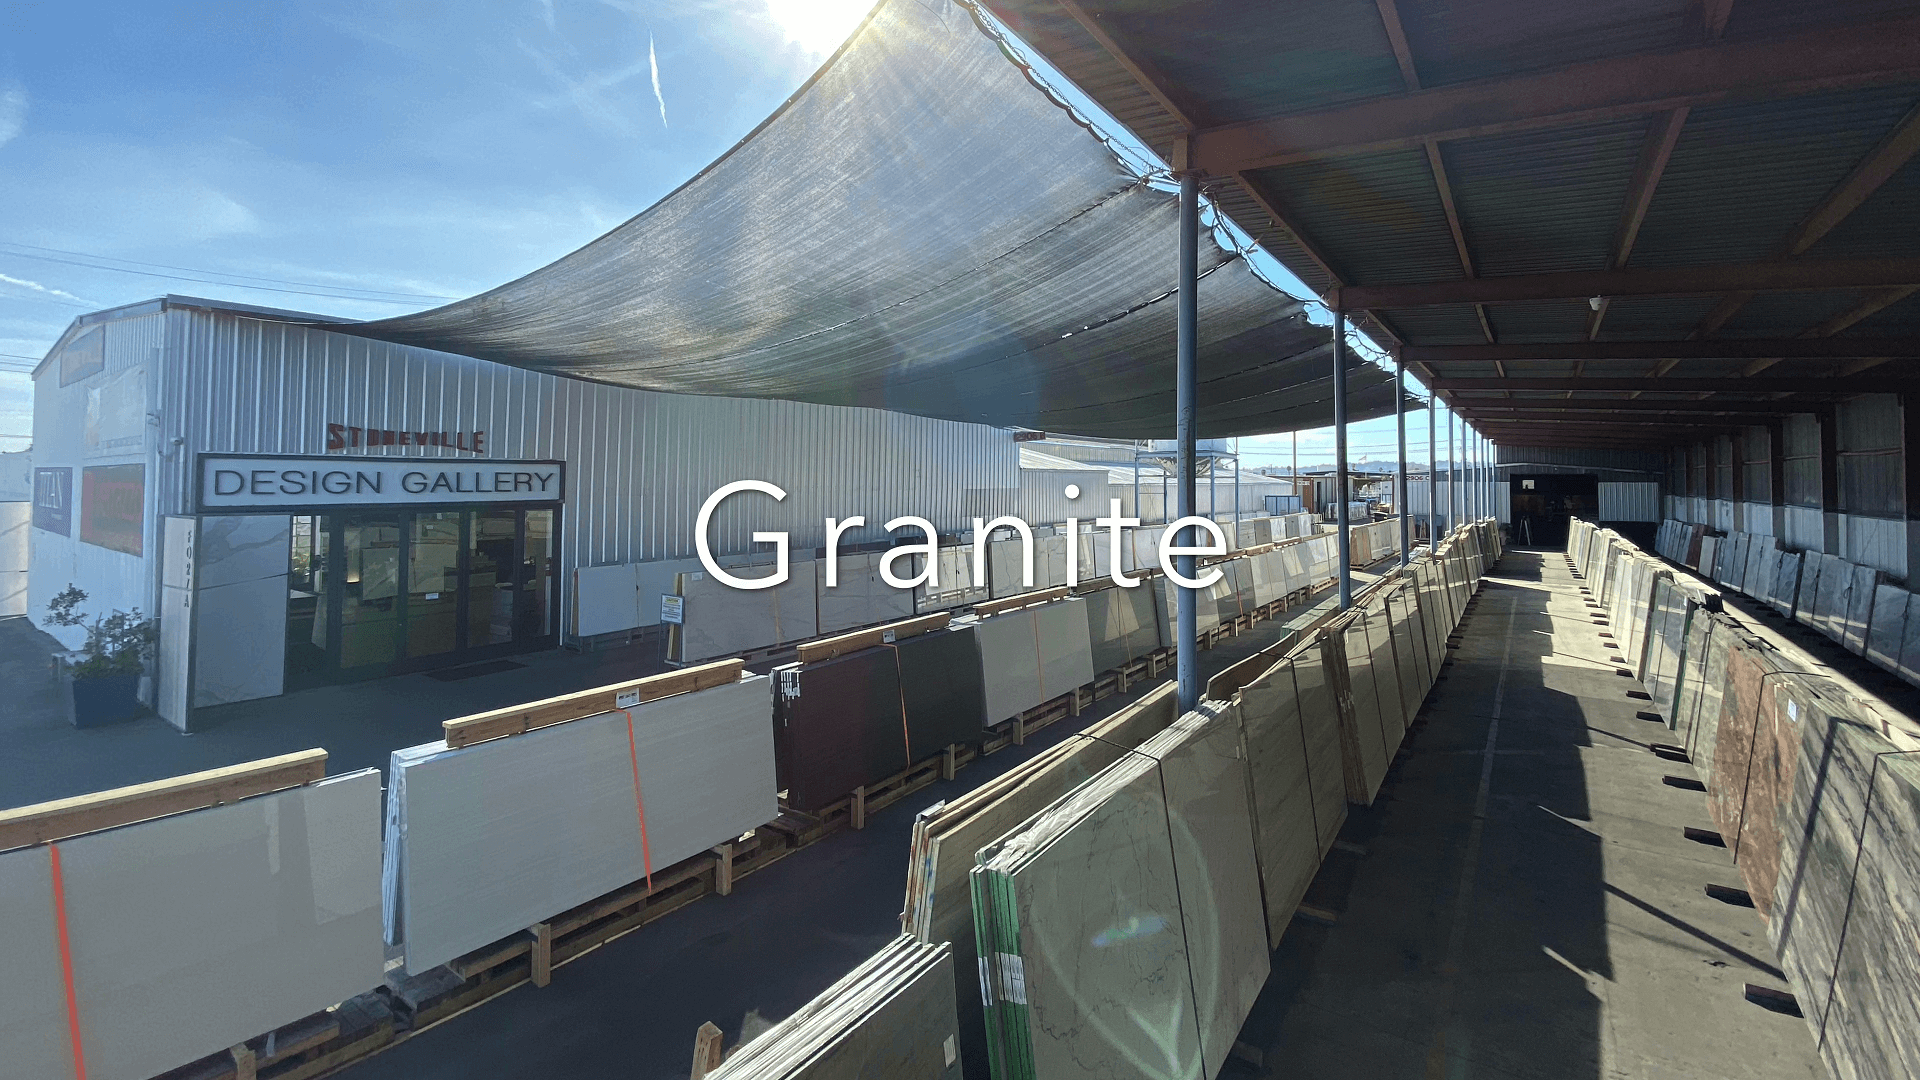 GRANITE GALLERY AT STONEVILLE USA